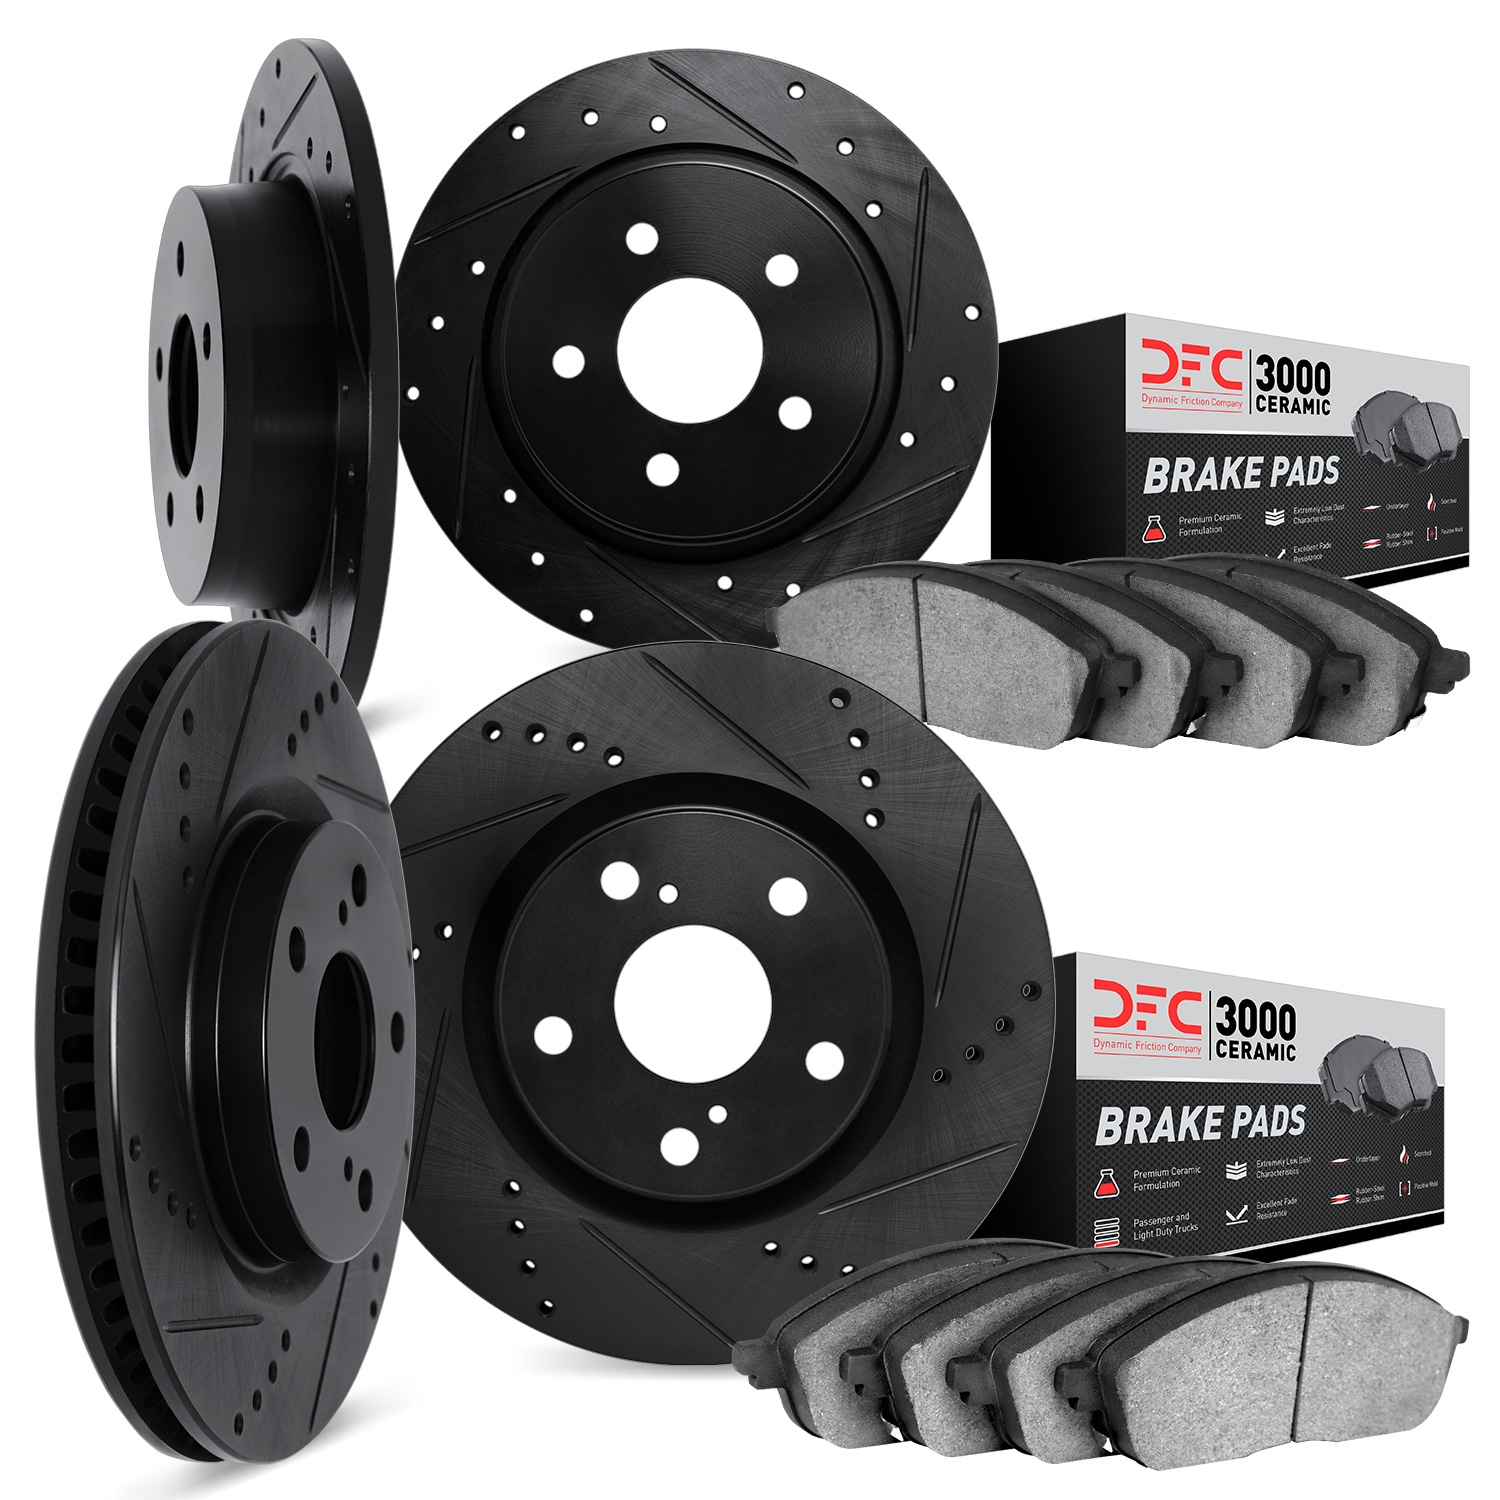 8304-54081 Drilled/Slotted Brake Rotors with 3000-Series Ceramic Brake Pads Kit [Black], 2011-2012 Ford/Lincoln/Mercury/Mazda, P